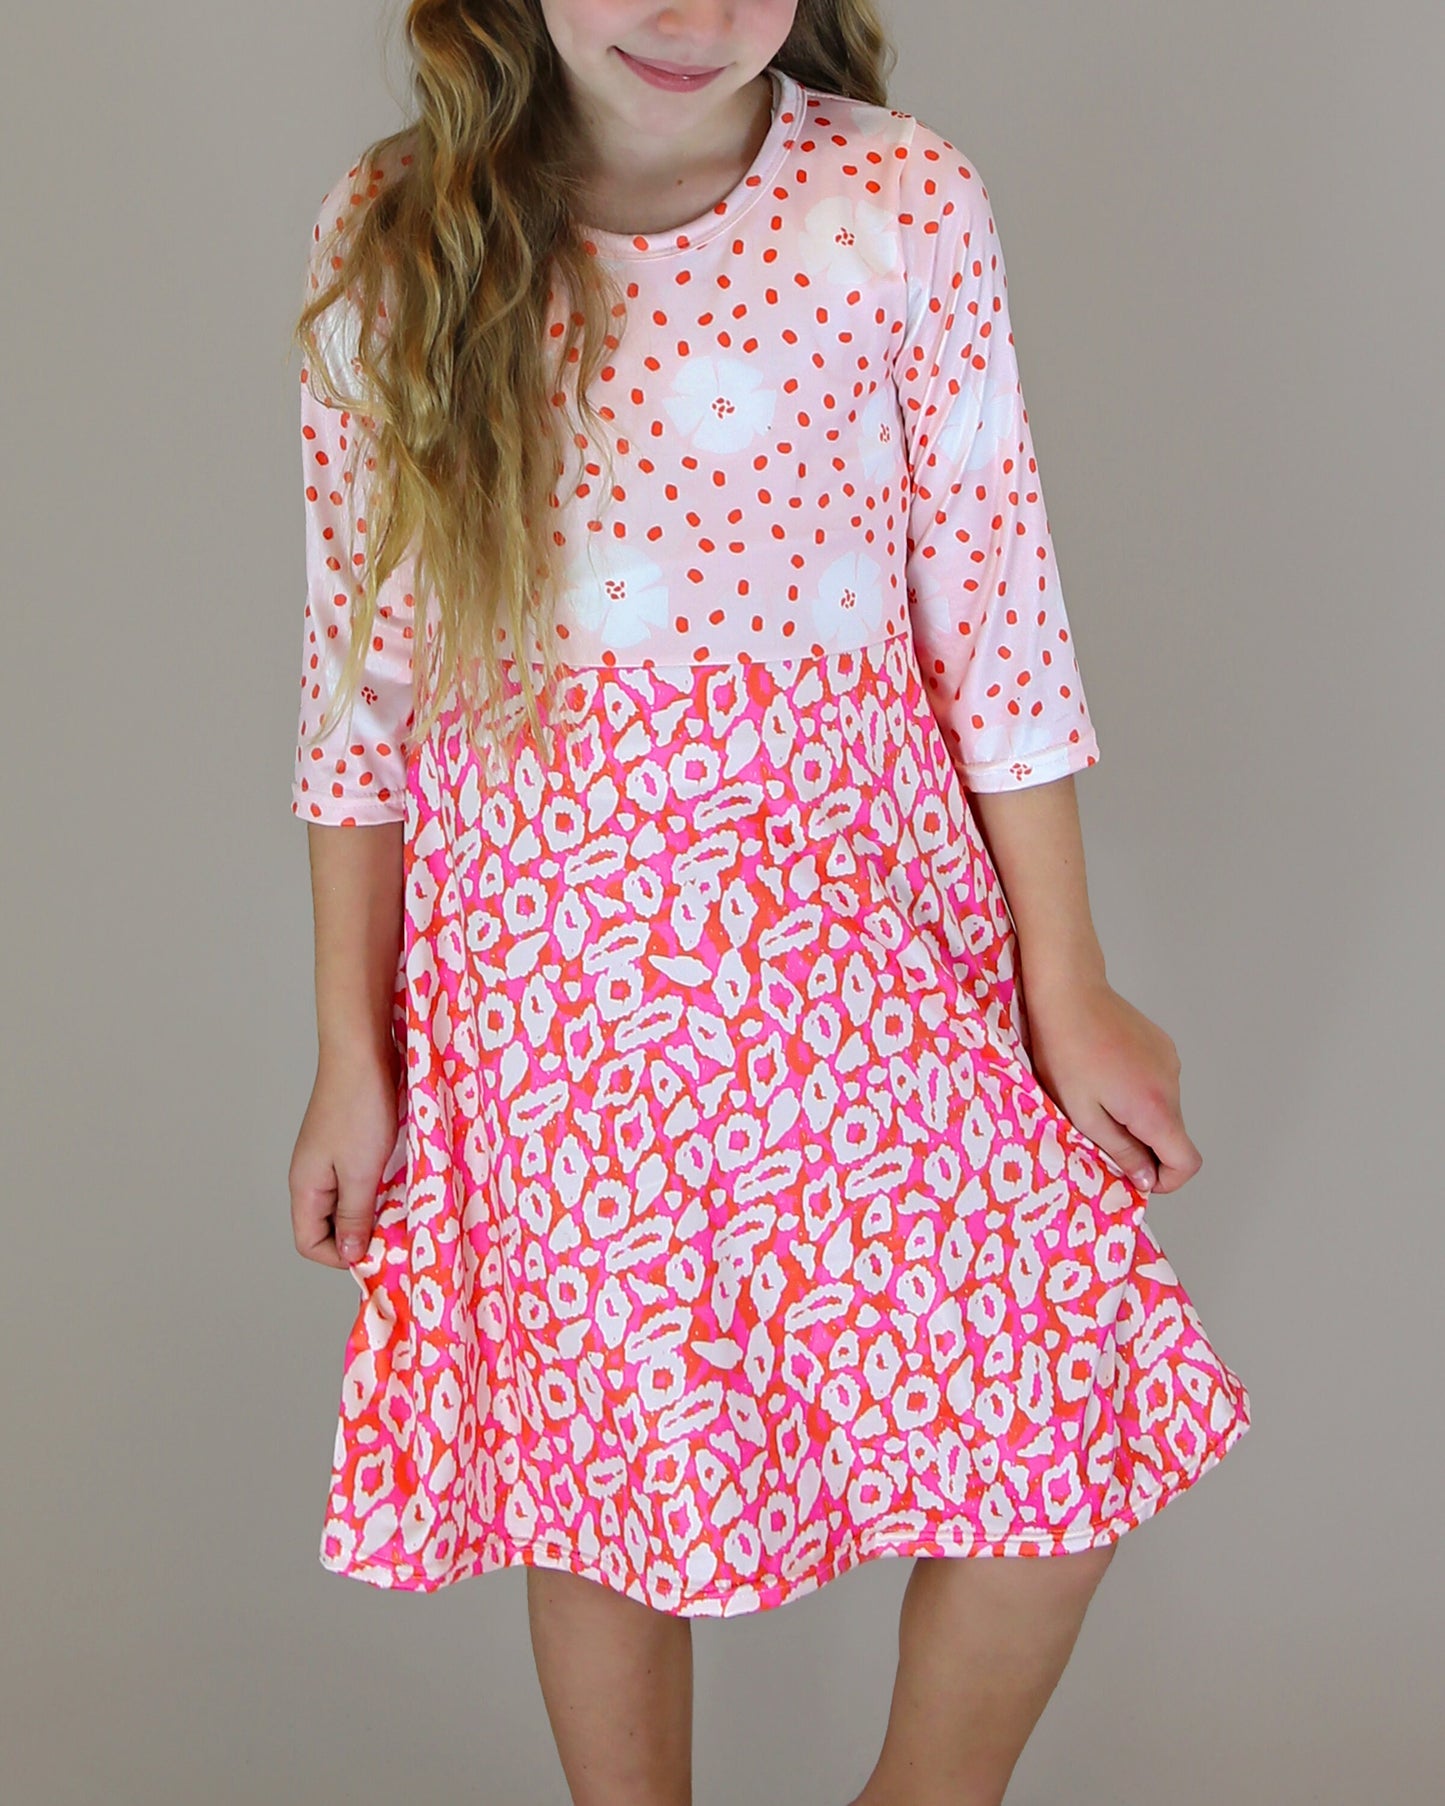 A-Line Dress - Girls Dress - Twirly Dress - Birthday Dress - Party Dress - Pink and Coral Animal Print Floral Dress